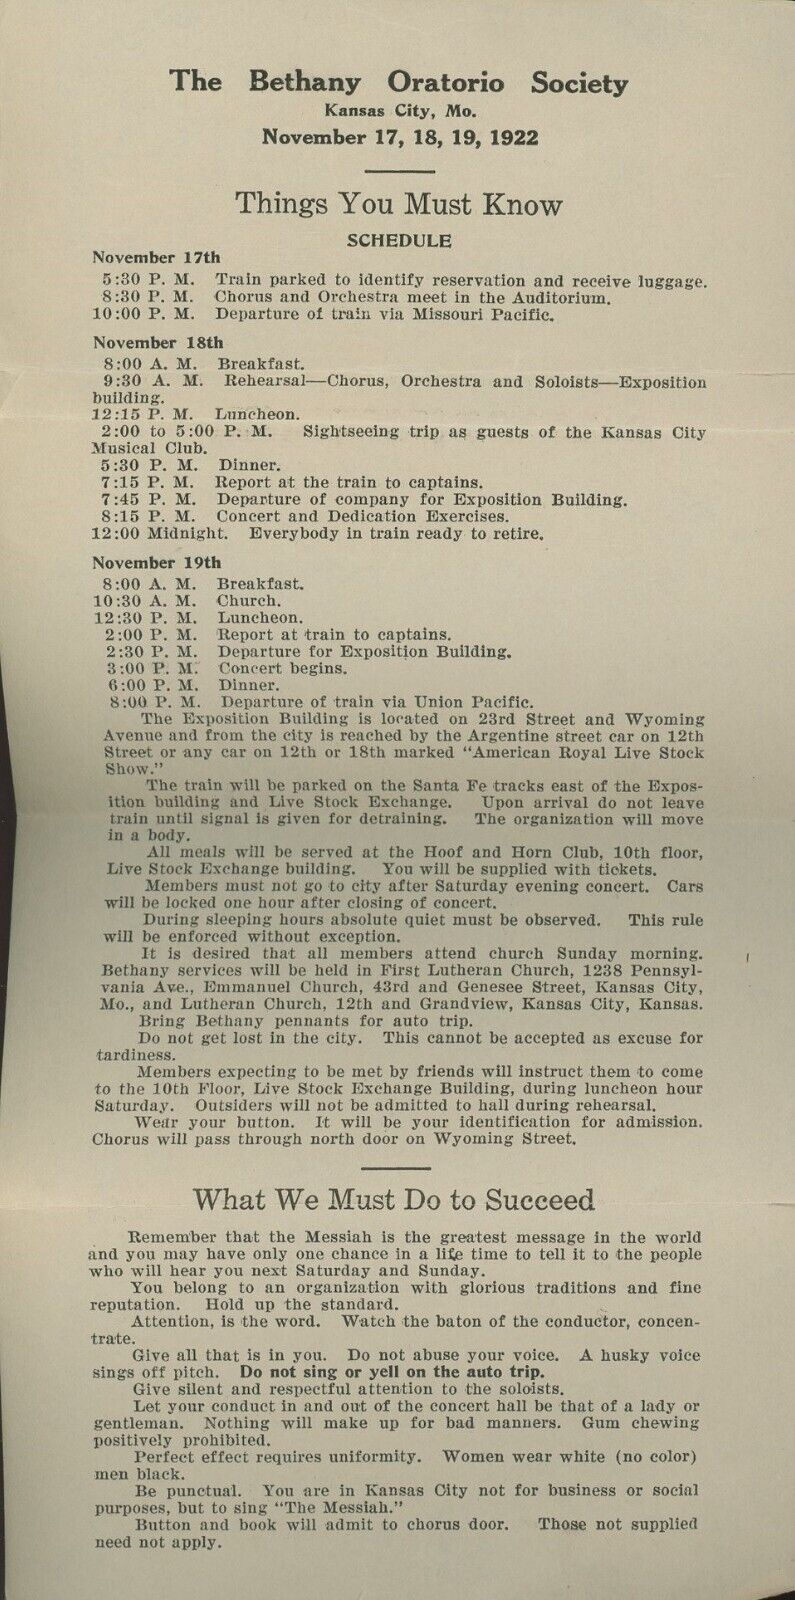 November 17, 18, 19 1922 The Bethany Oratorio Society Schedule and Ephemera